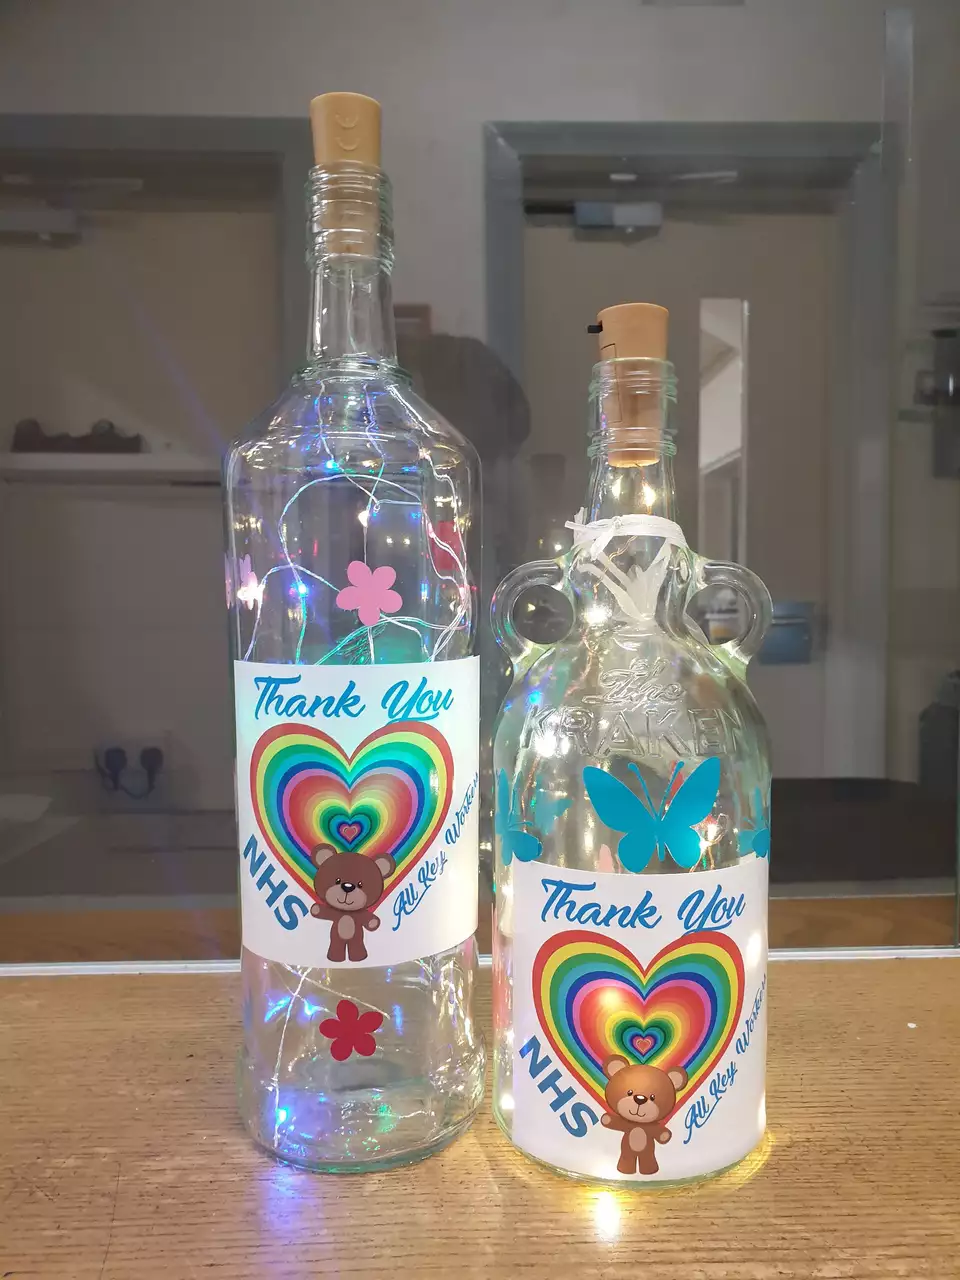 Thank you NHS decorated bottles! | Asda Killingbeck